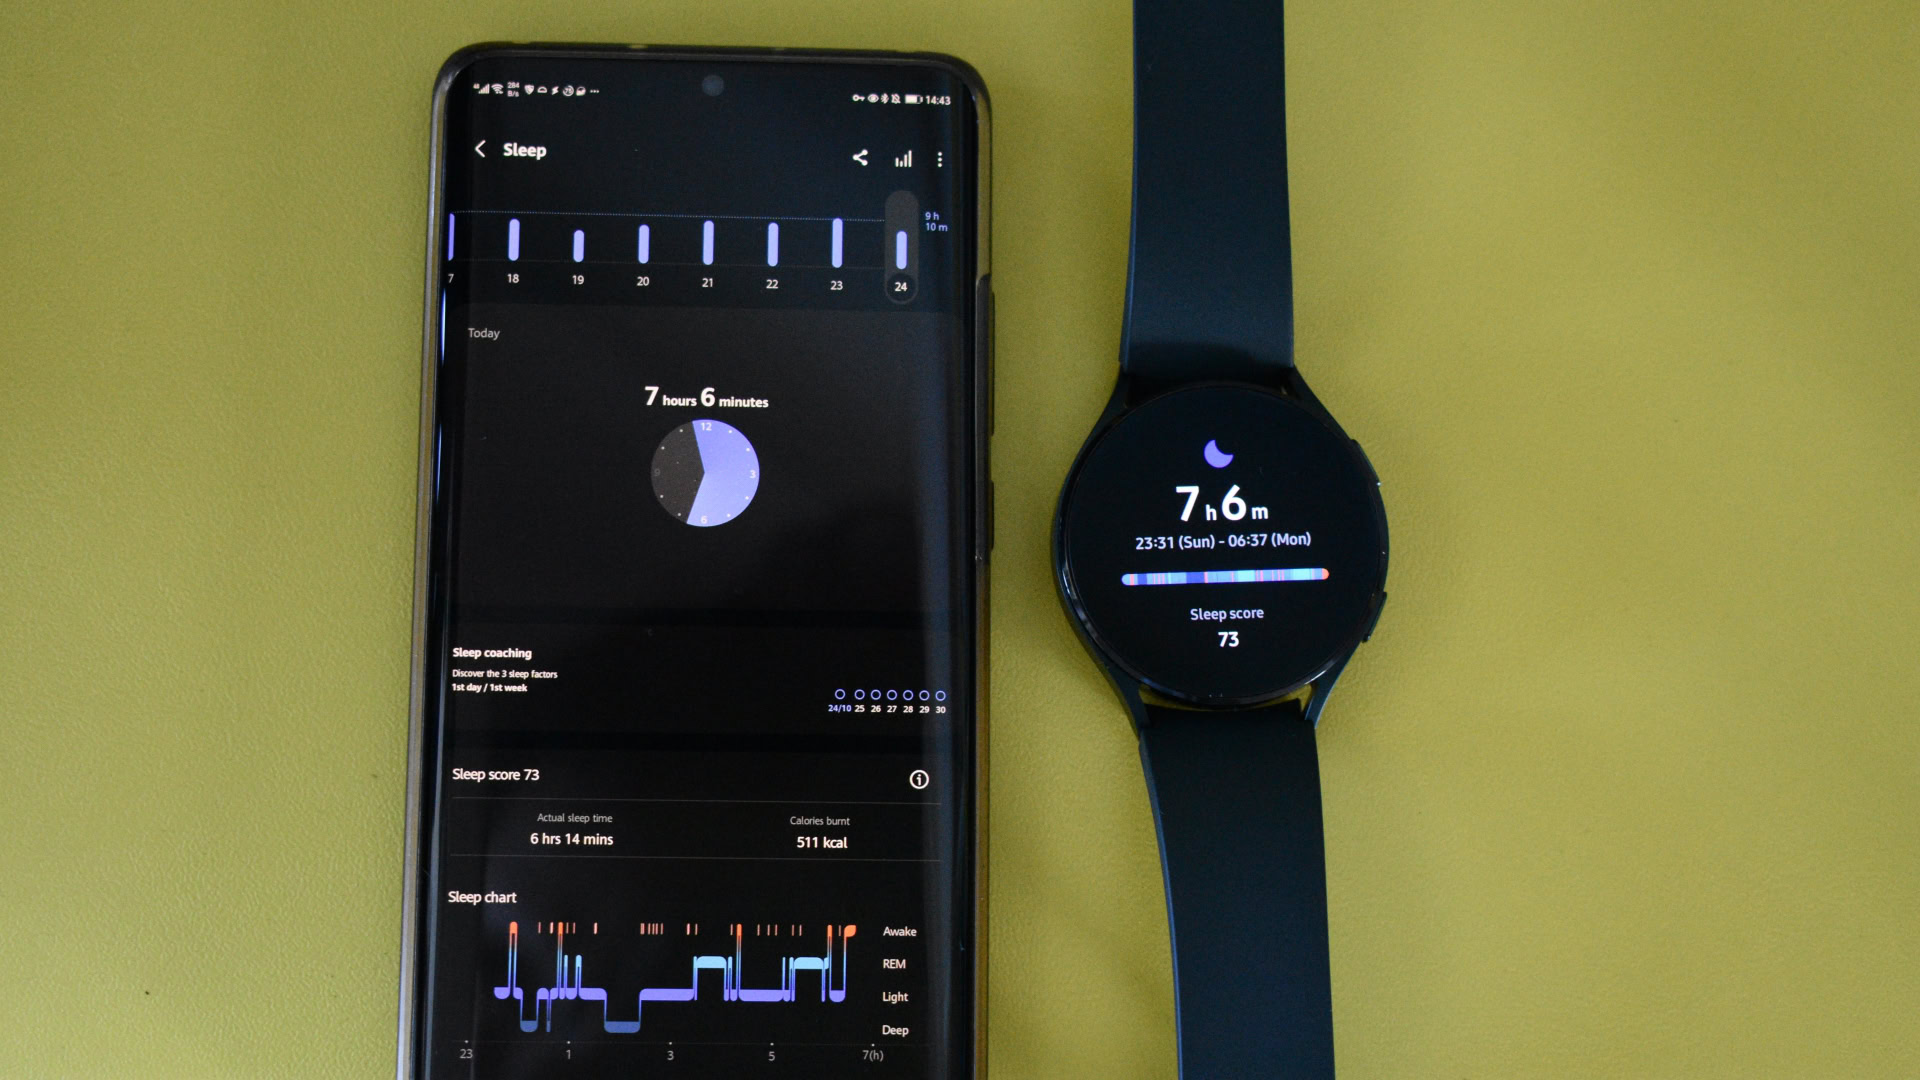 Samsung Galaxy sleep tracking: Everything you need to know